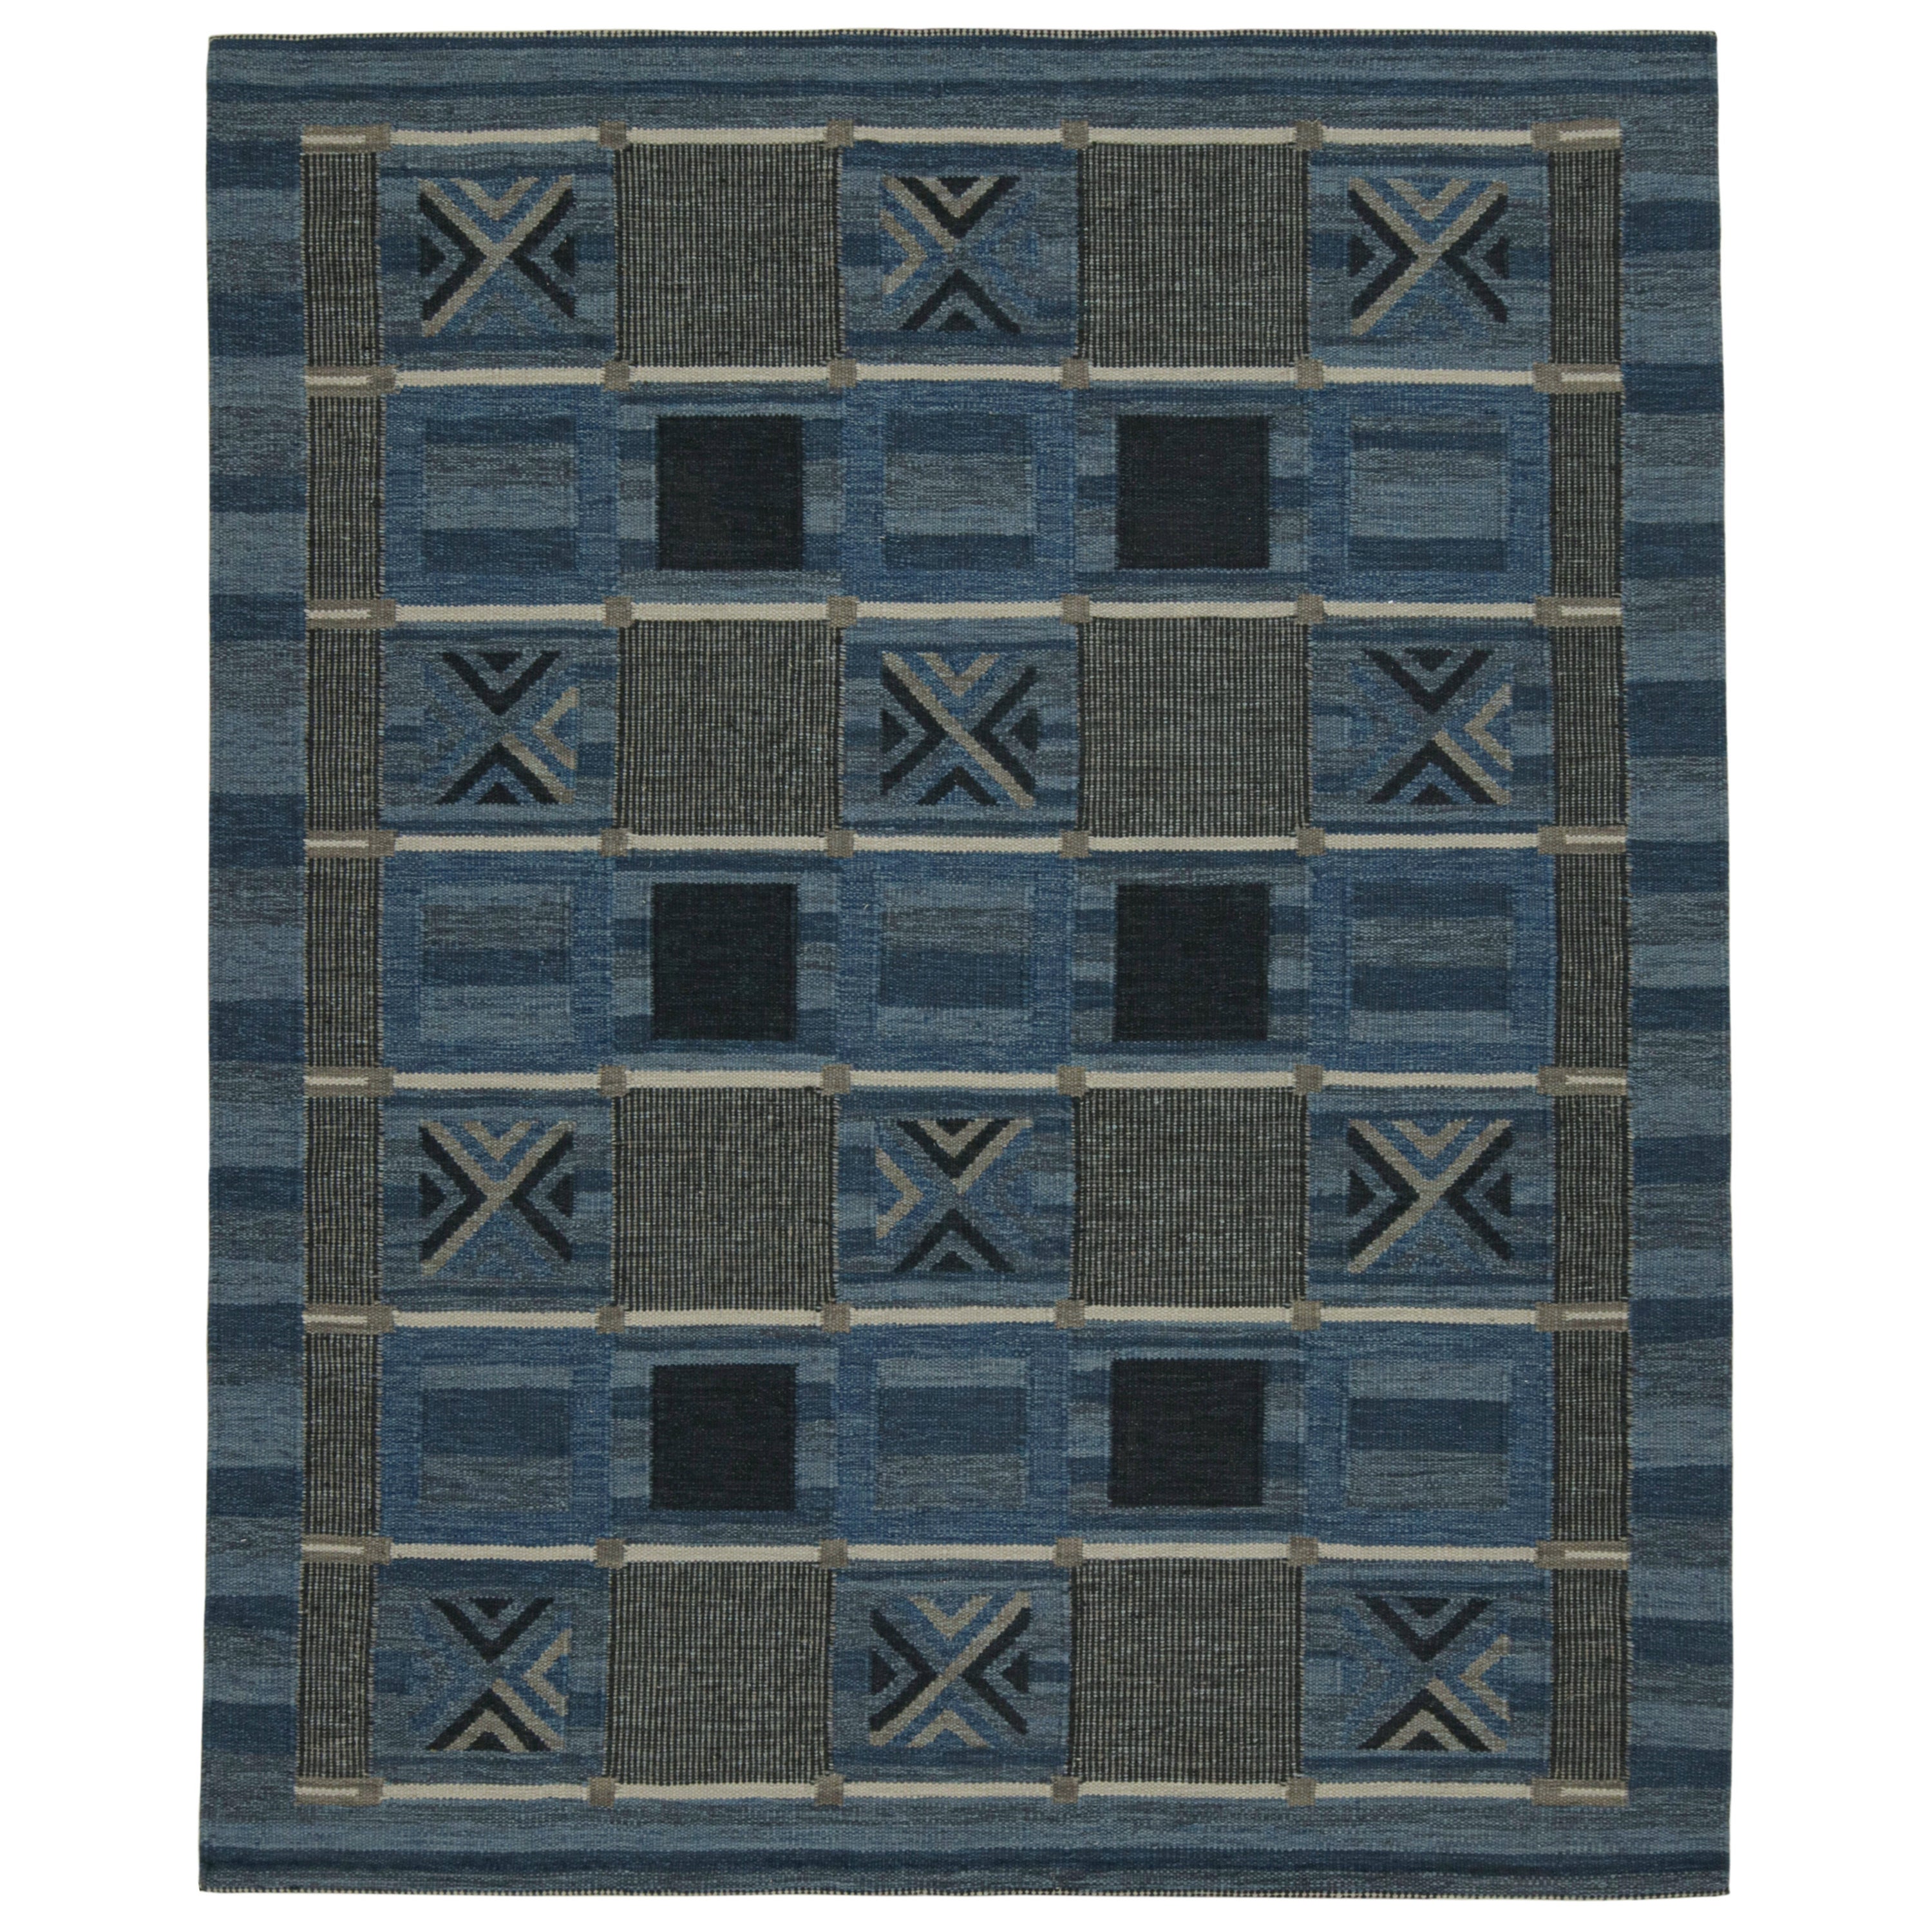 Rug & Kilim’s Scandinavian Style Kilim Rug with Blue and Gray Geometric Patterns